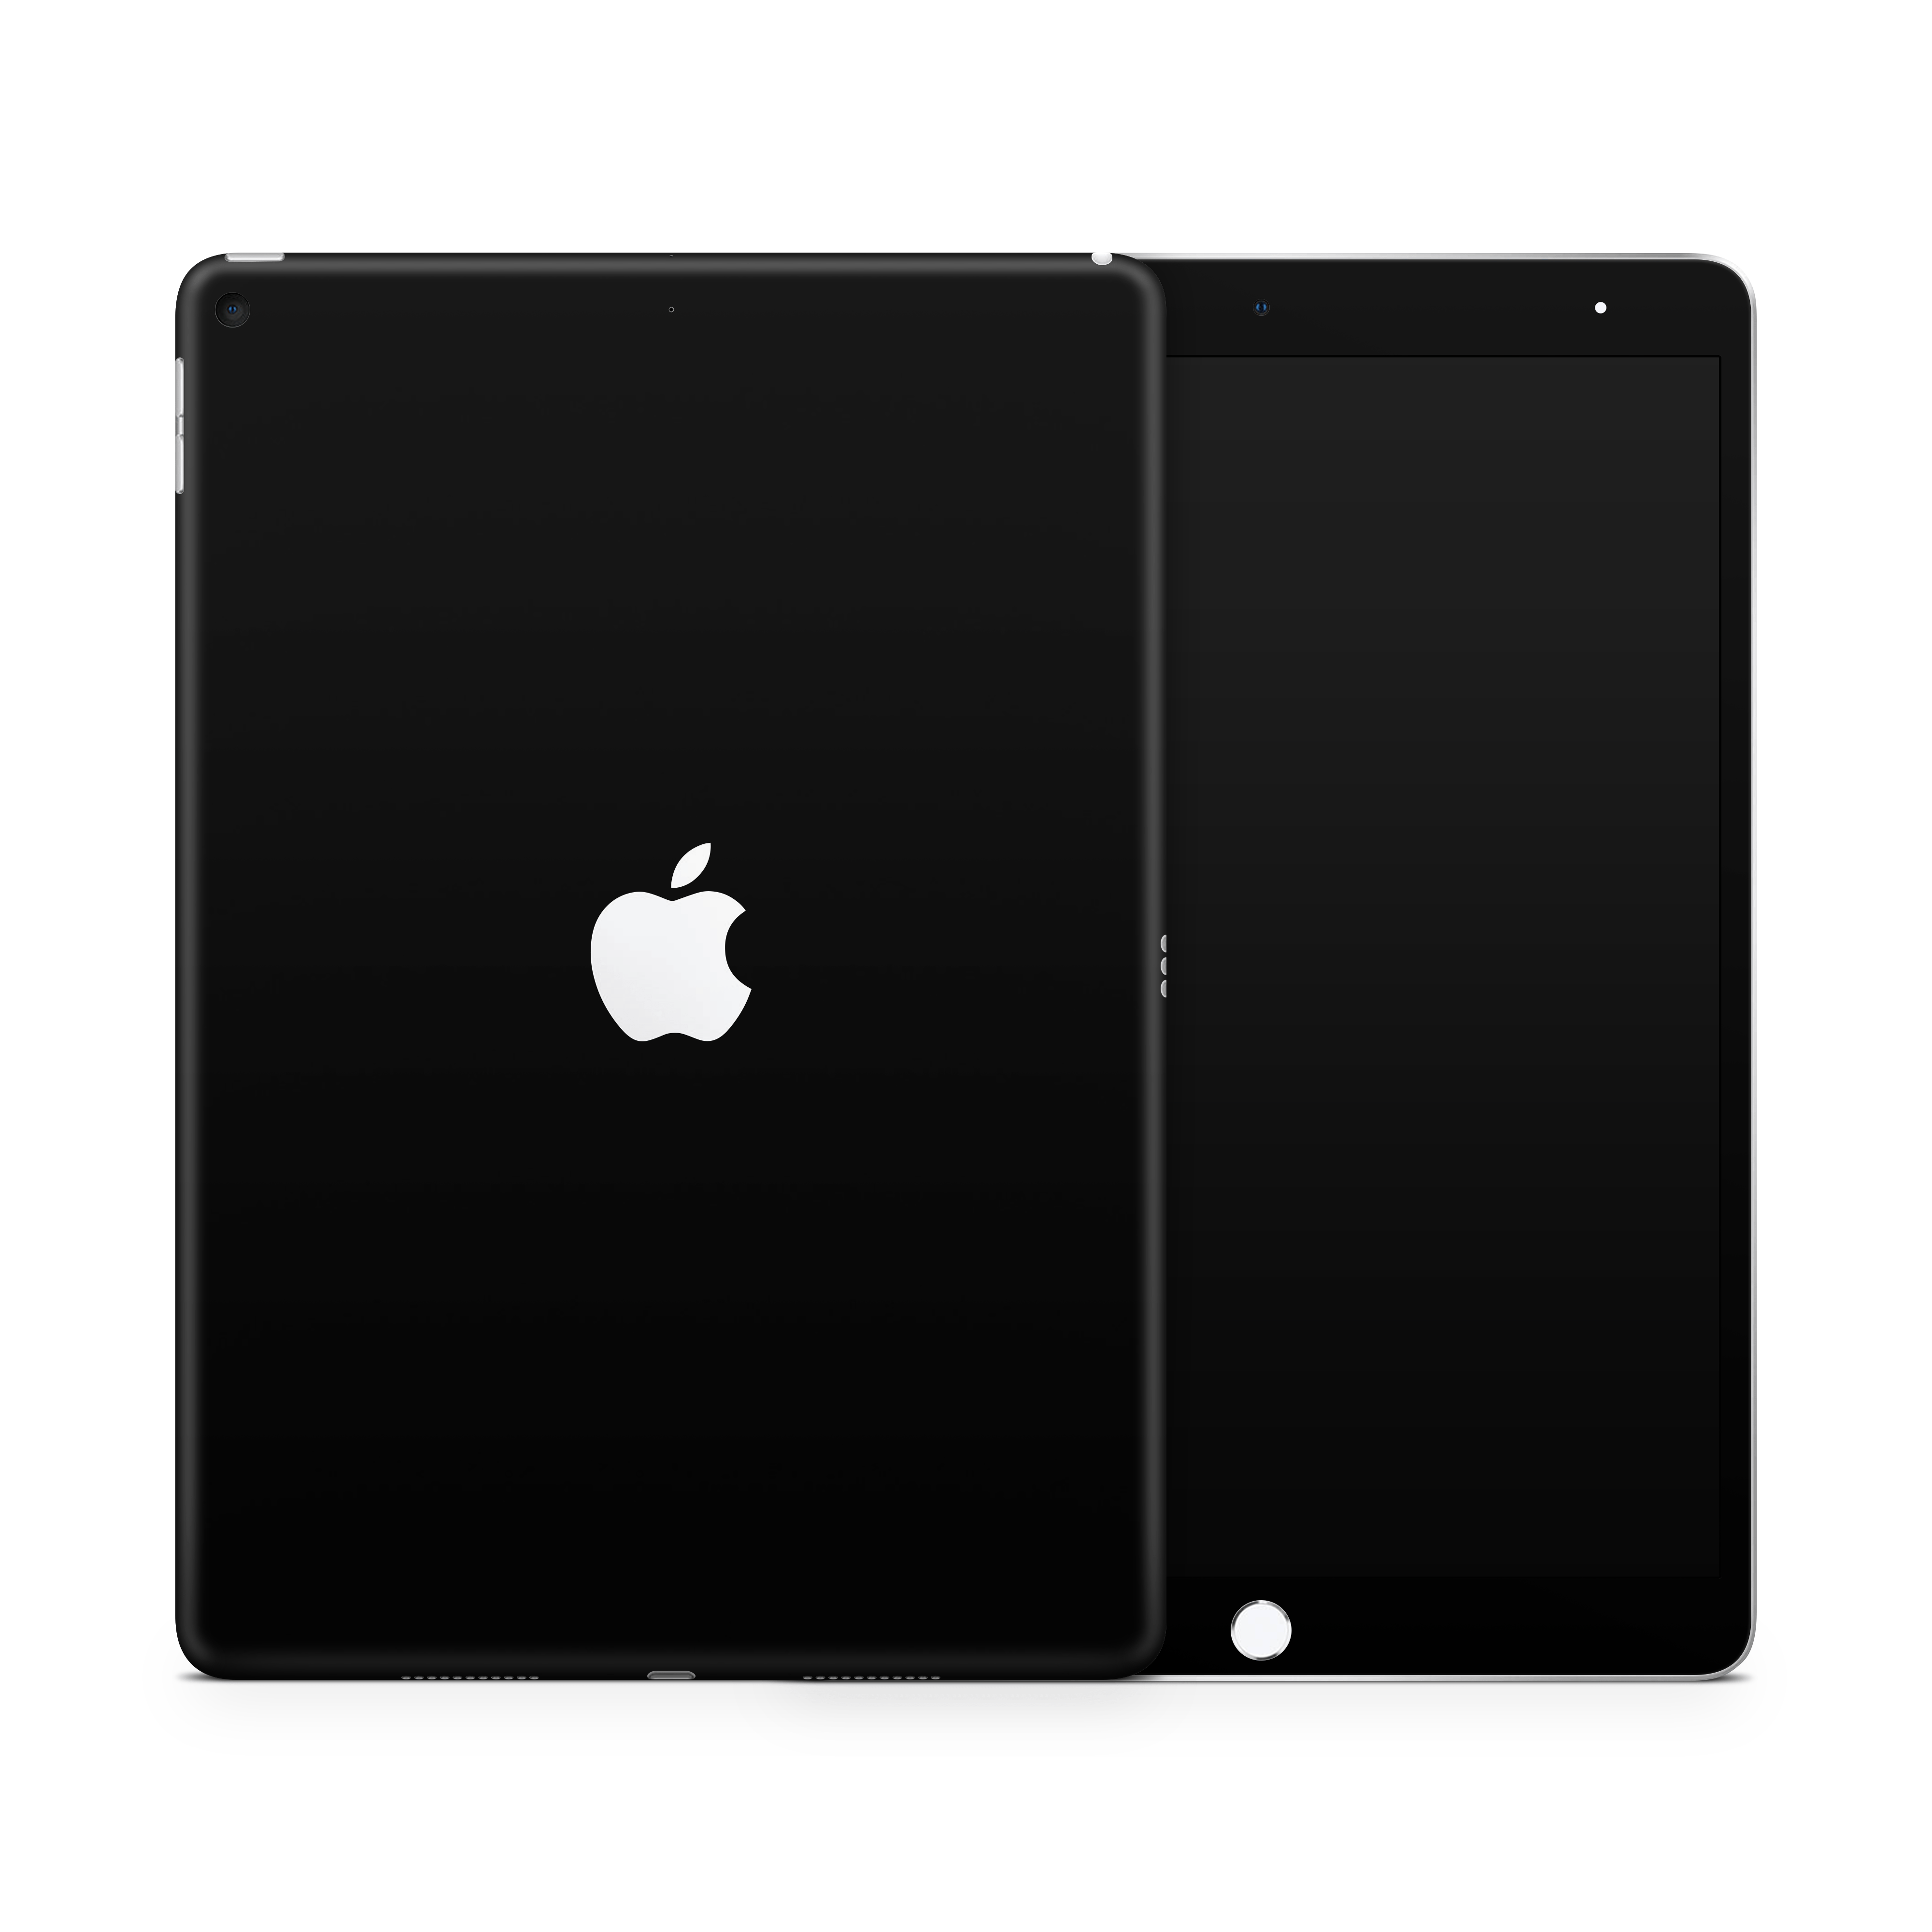 Blackout Apple iPad Air Skin